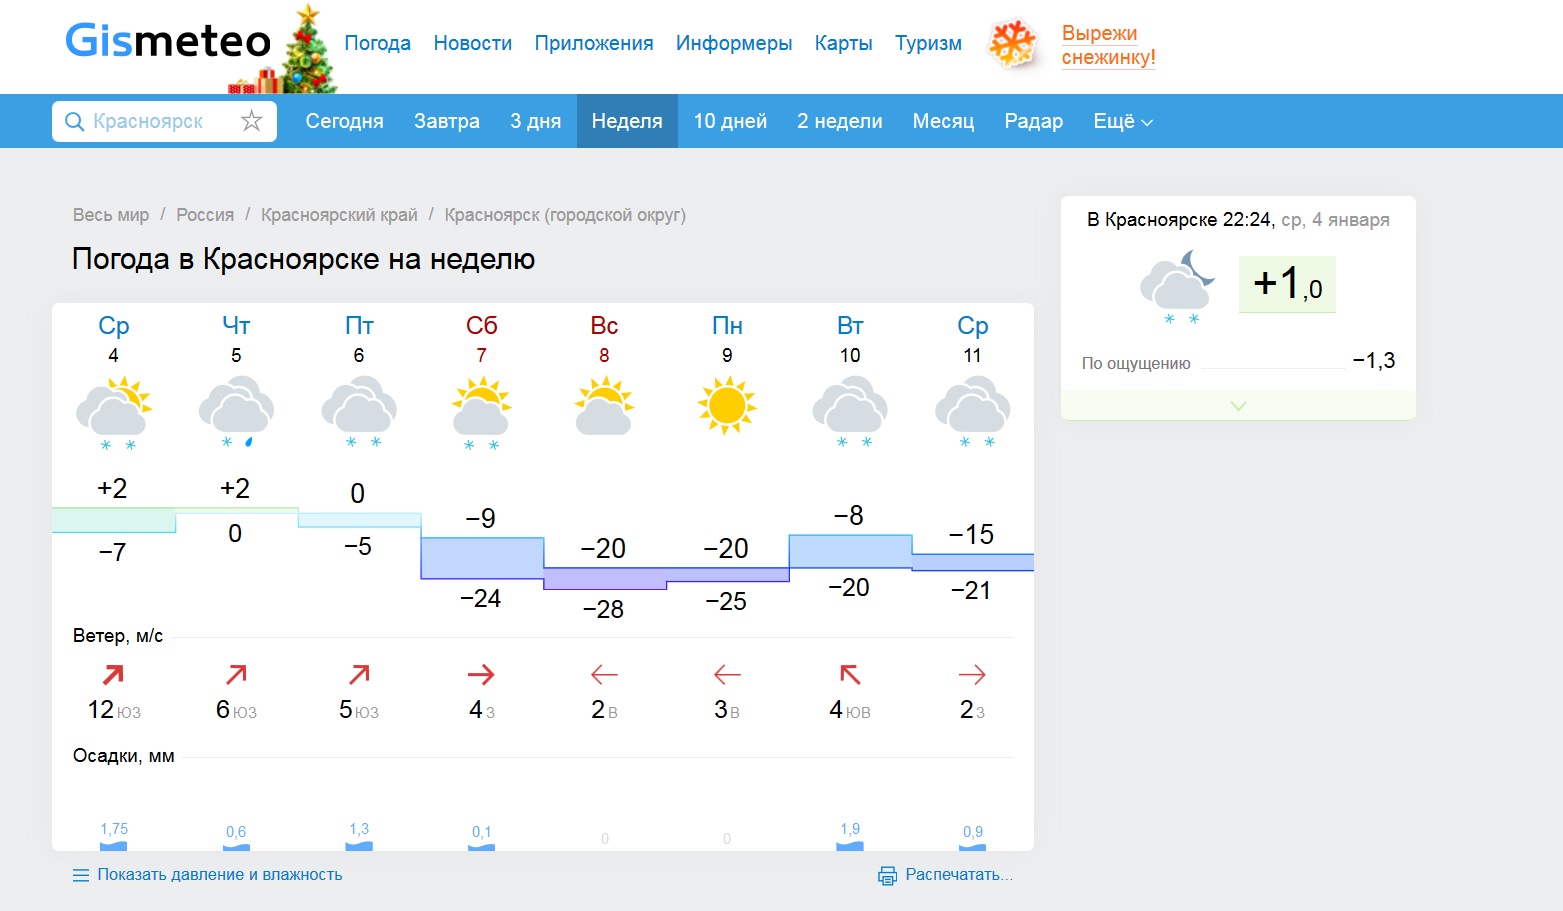 Гисметео красноярск сегодня. Погода в Красноярске на неделю. GISMETEO Красноярск. Погода в Красноярске на завтра. Погода в Красноярске сегодня и завтра.